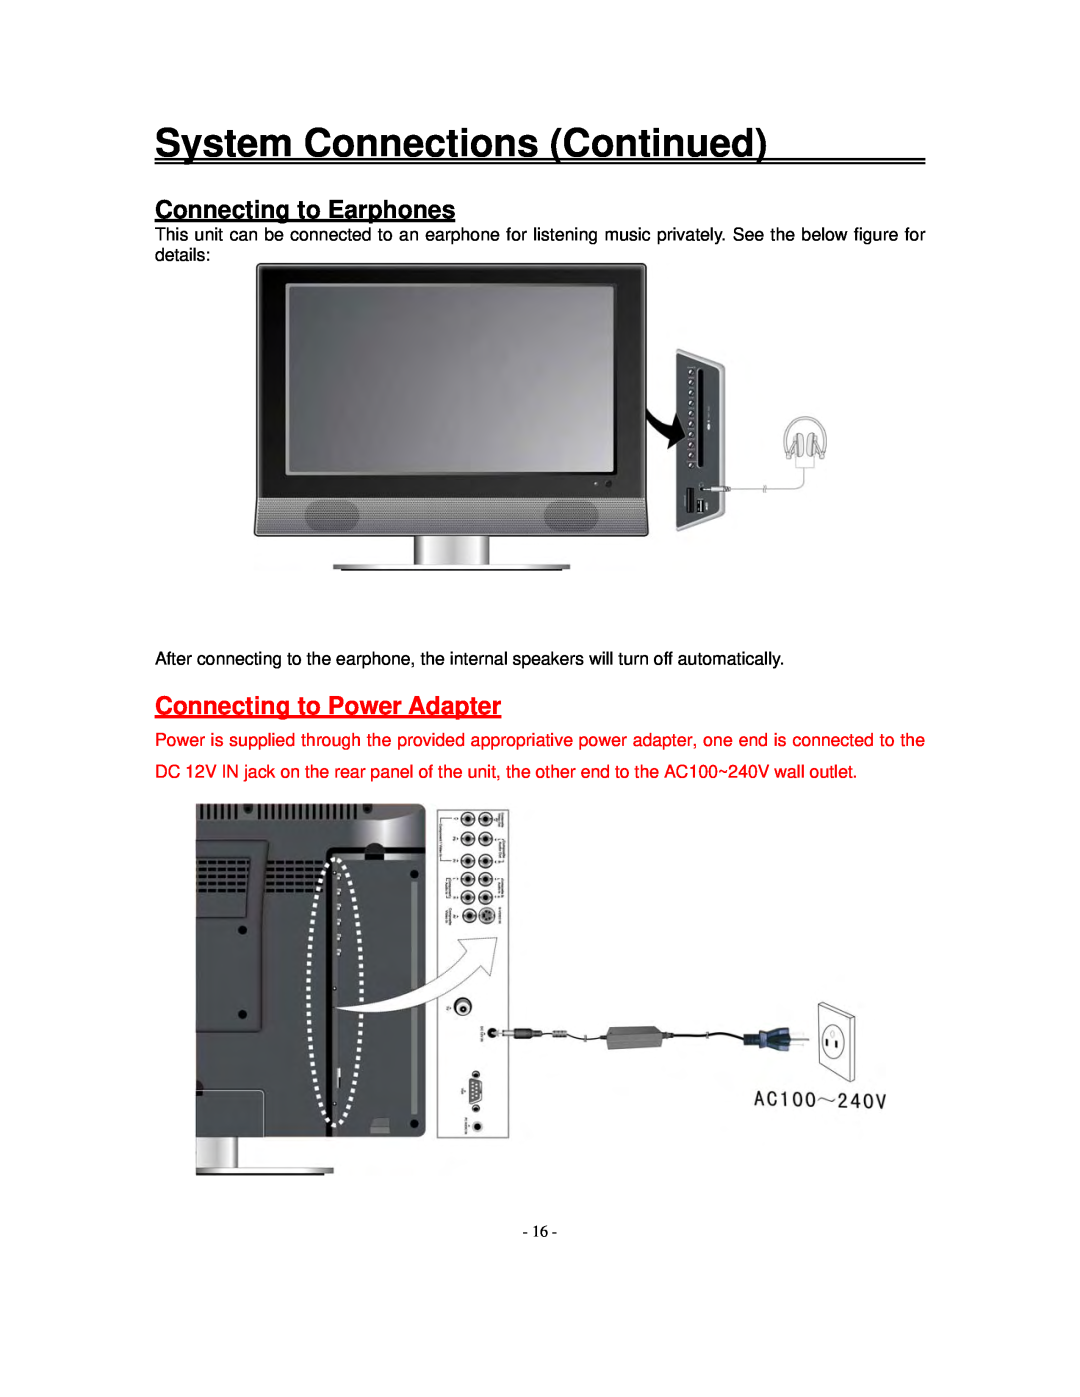 Polaroid FXM-1911C manual Connecting to Earphones, Connecting to Power Adapter, System Connections Continued 